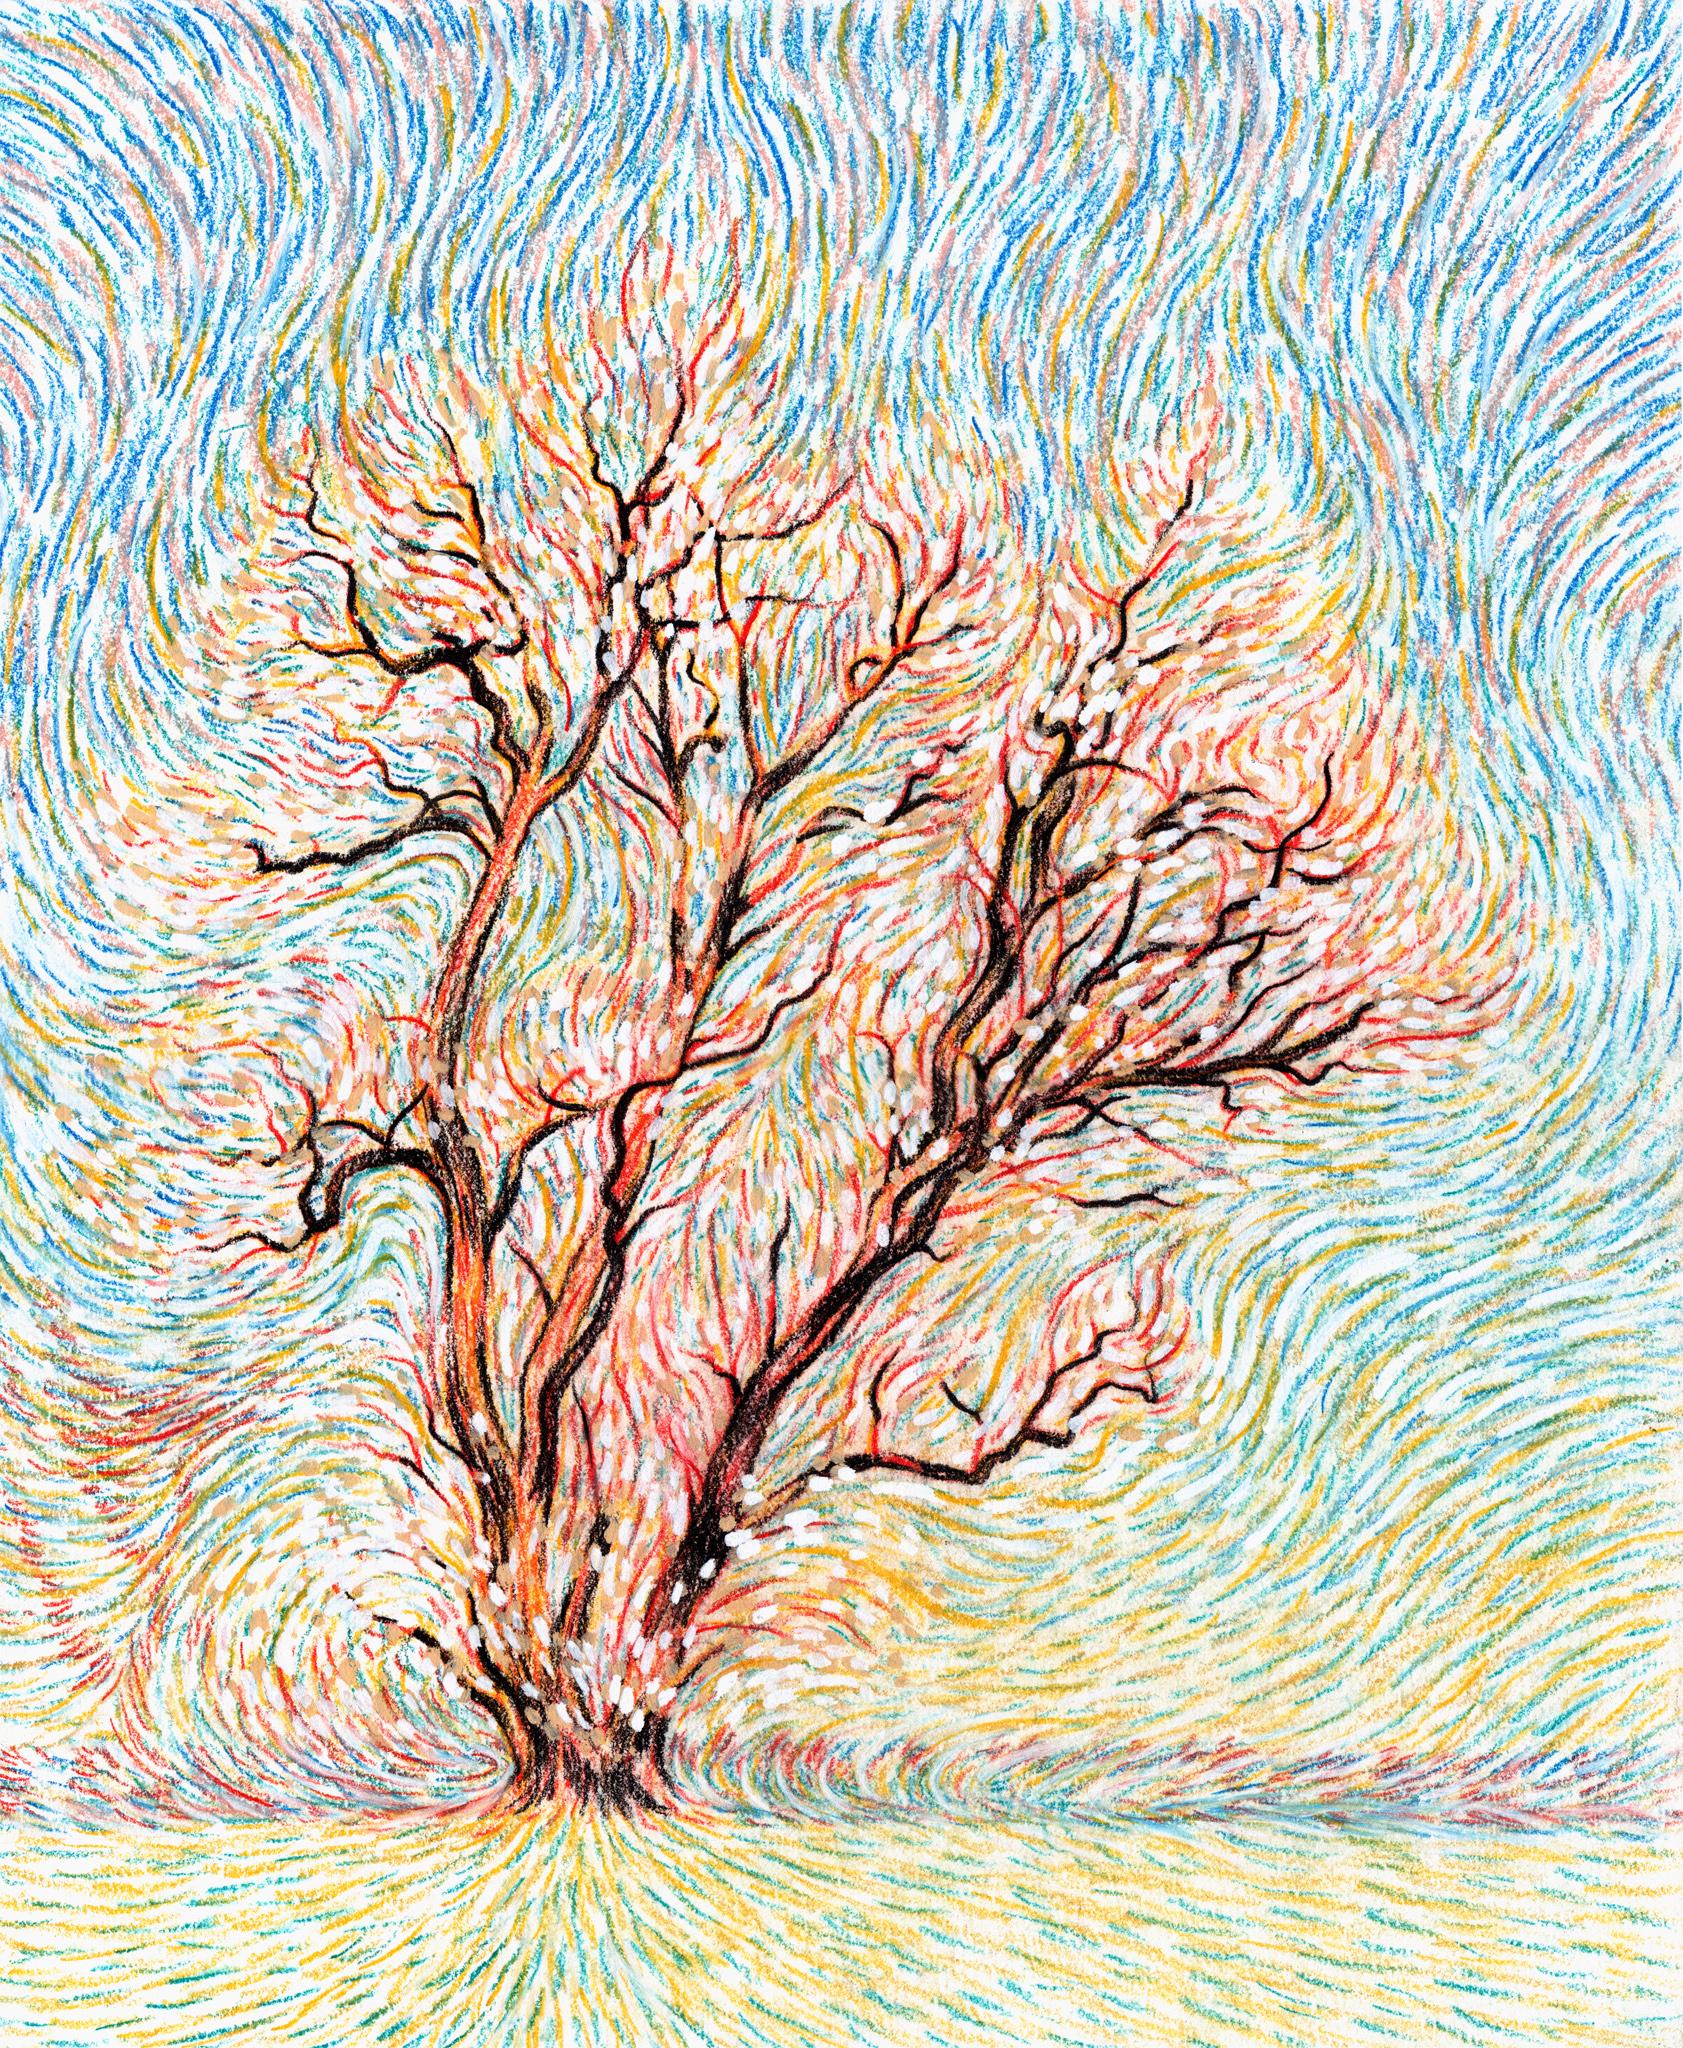 Art contemporain canadien de Christian Frederiksen - The Fire Tree